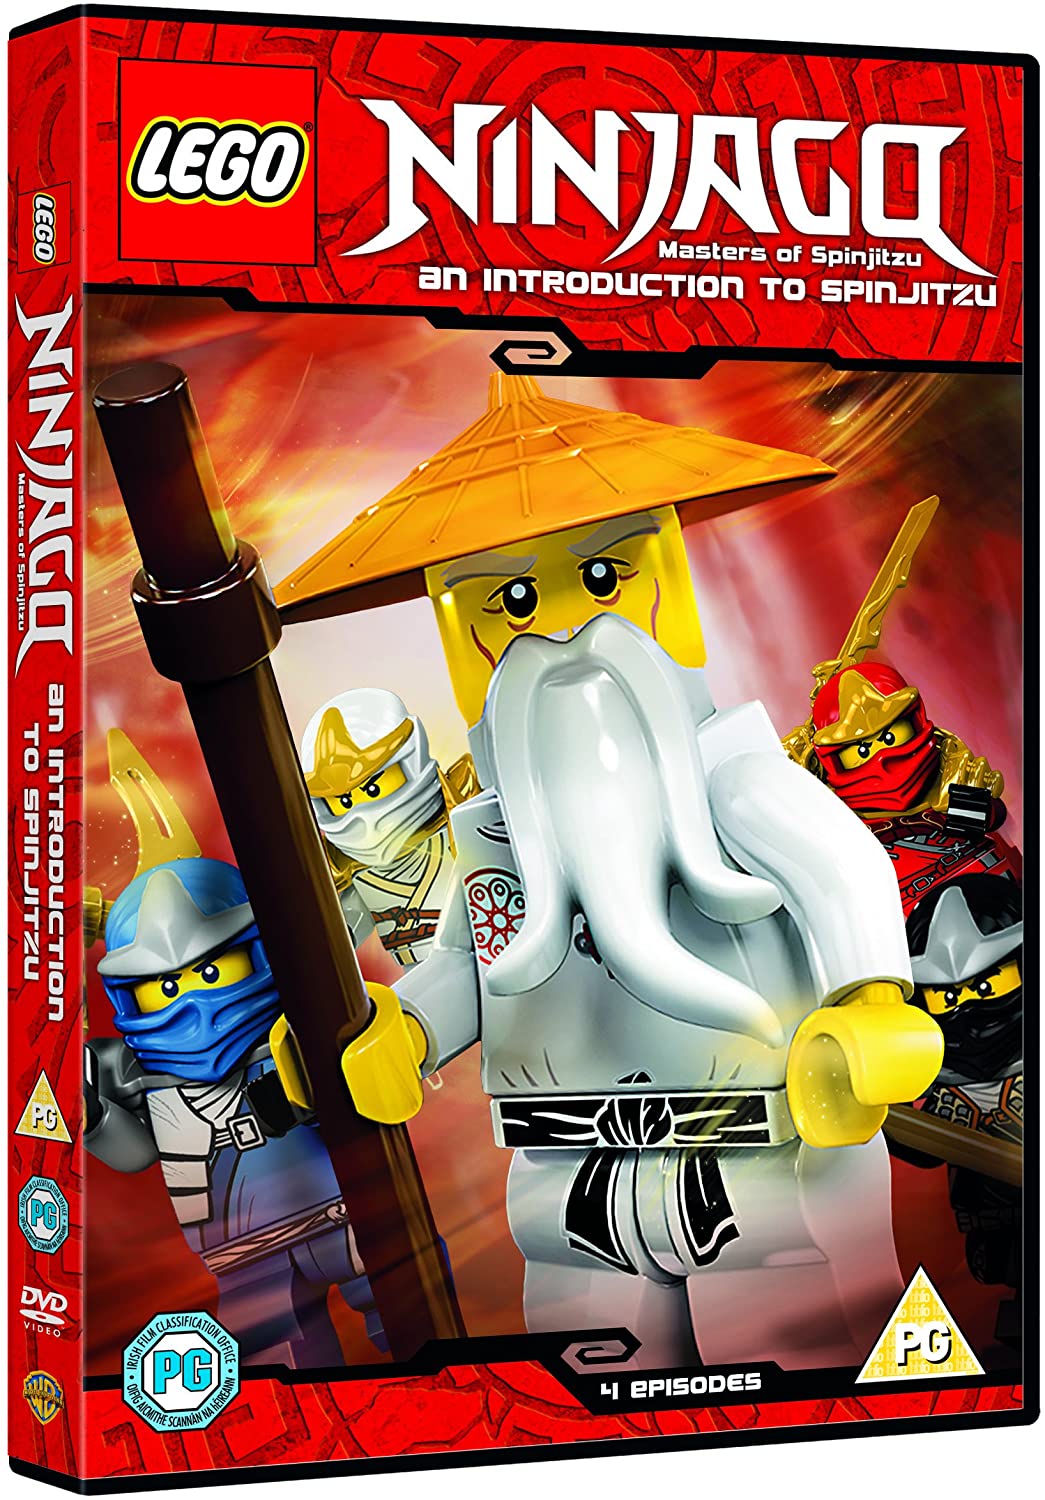 LEGO: Ninjago: Masters Of Spinjitzu [2011] - Adventure/Family [DVD]